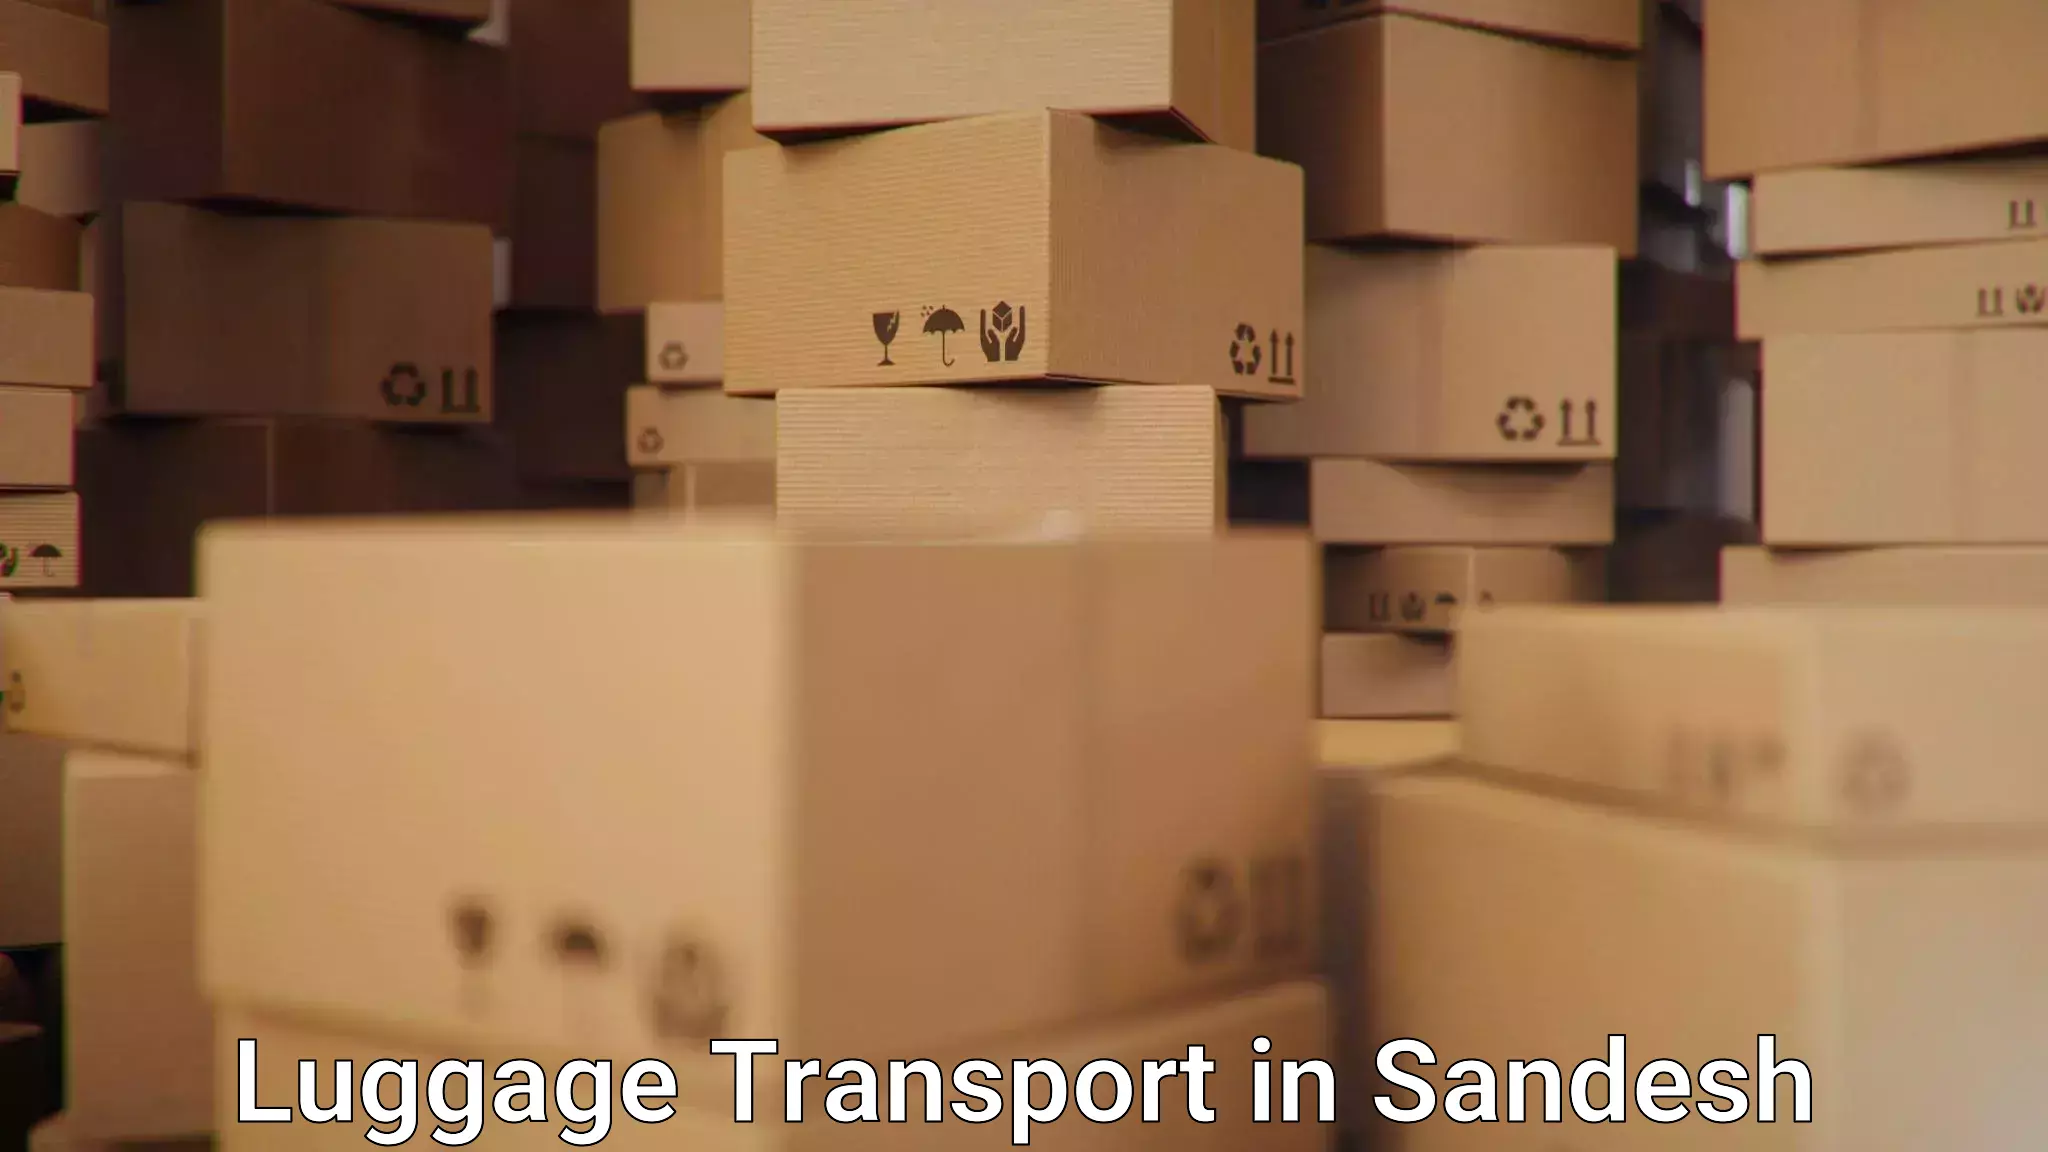 Express baggage shipping in Sandesh